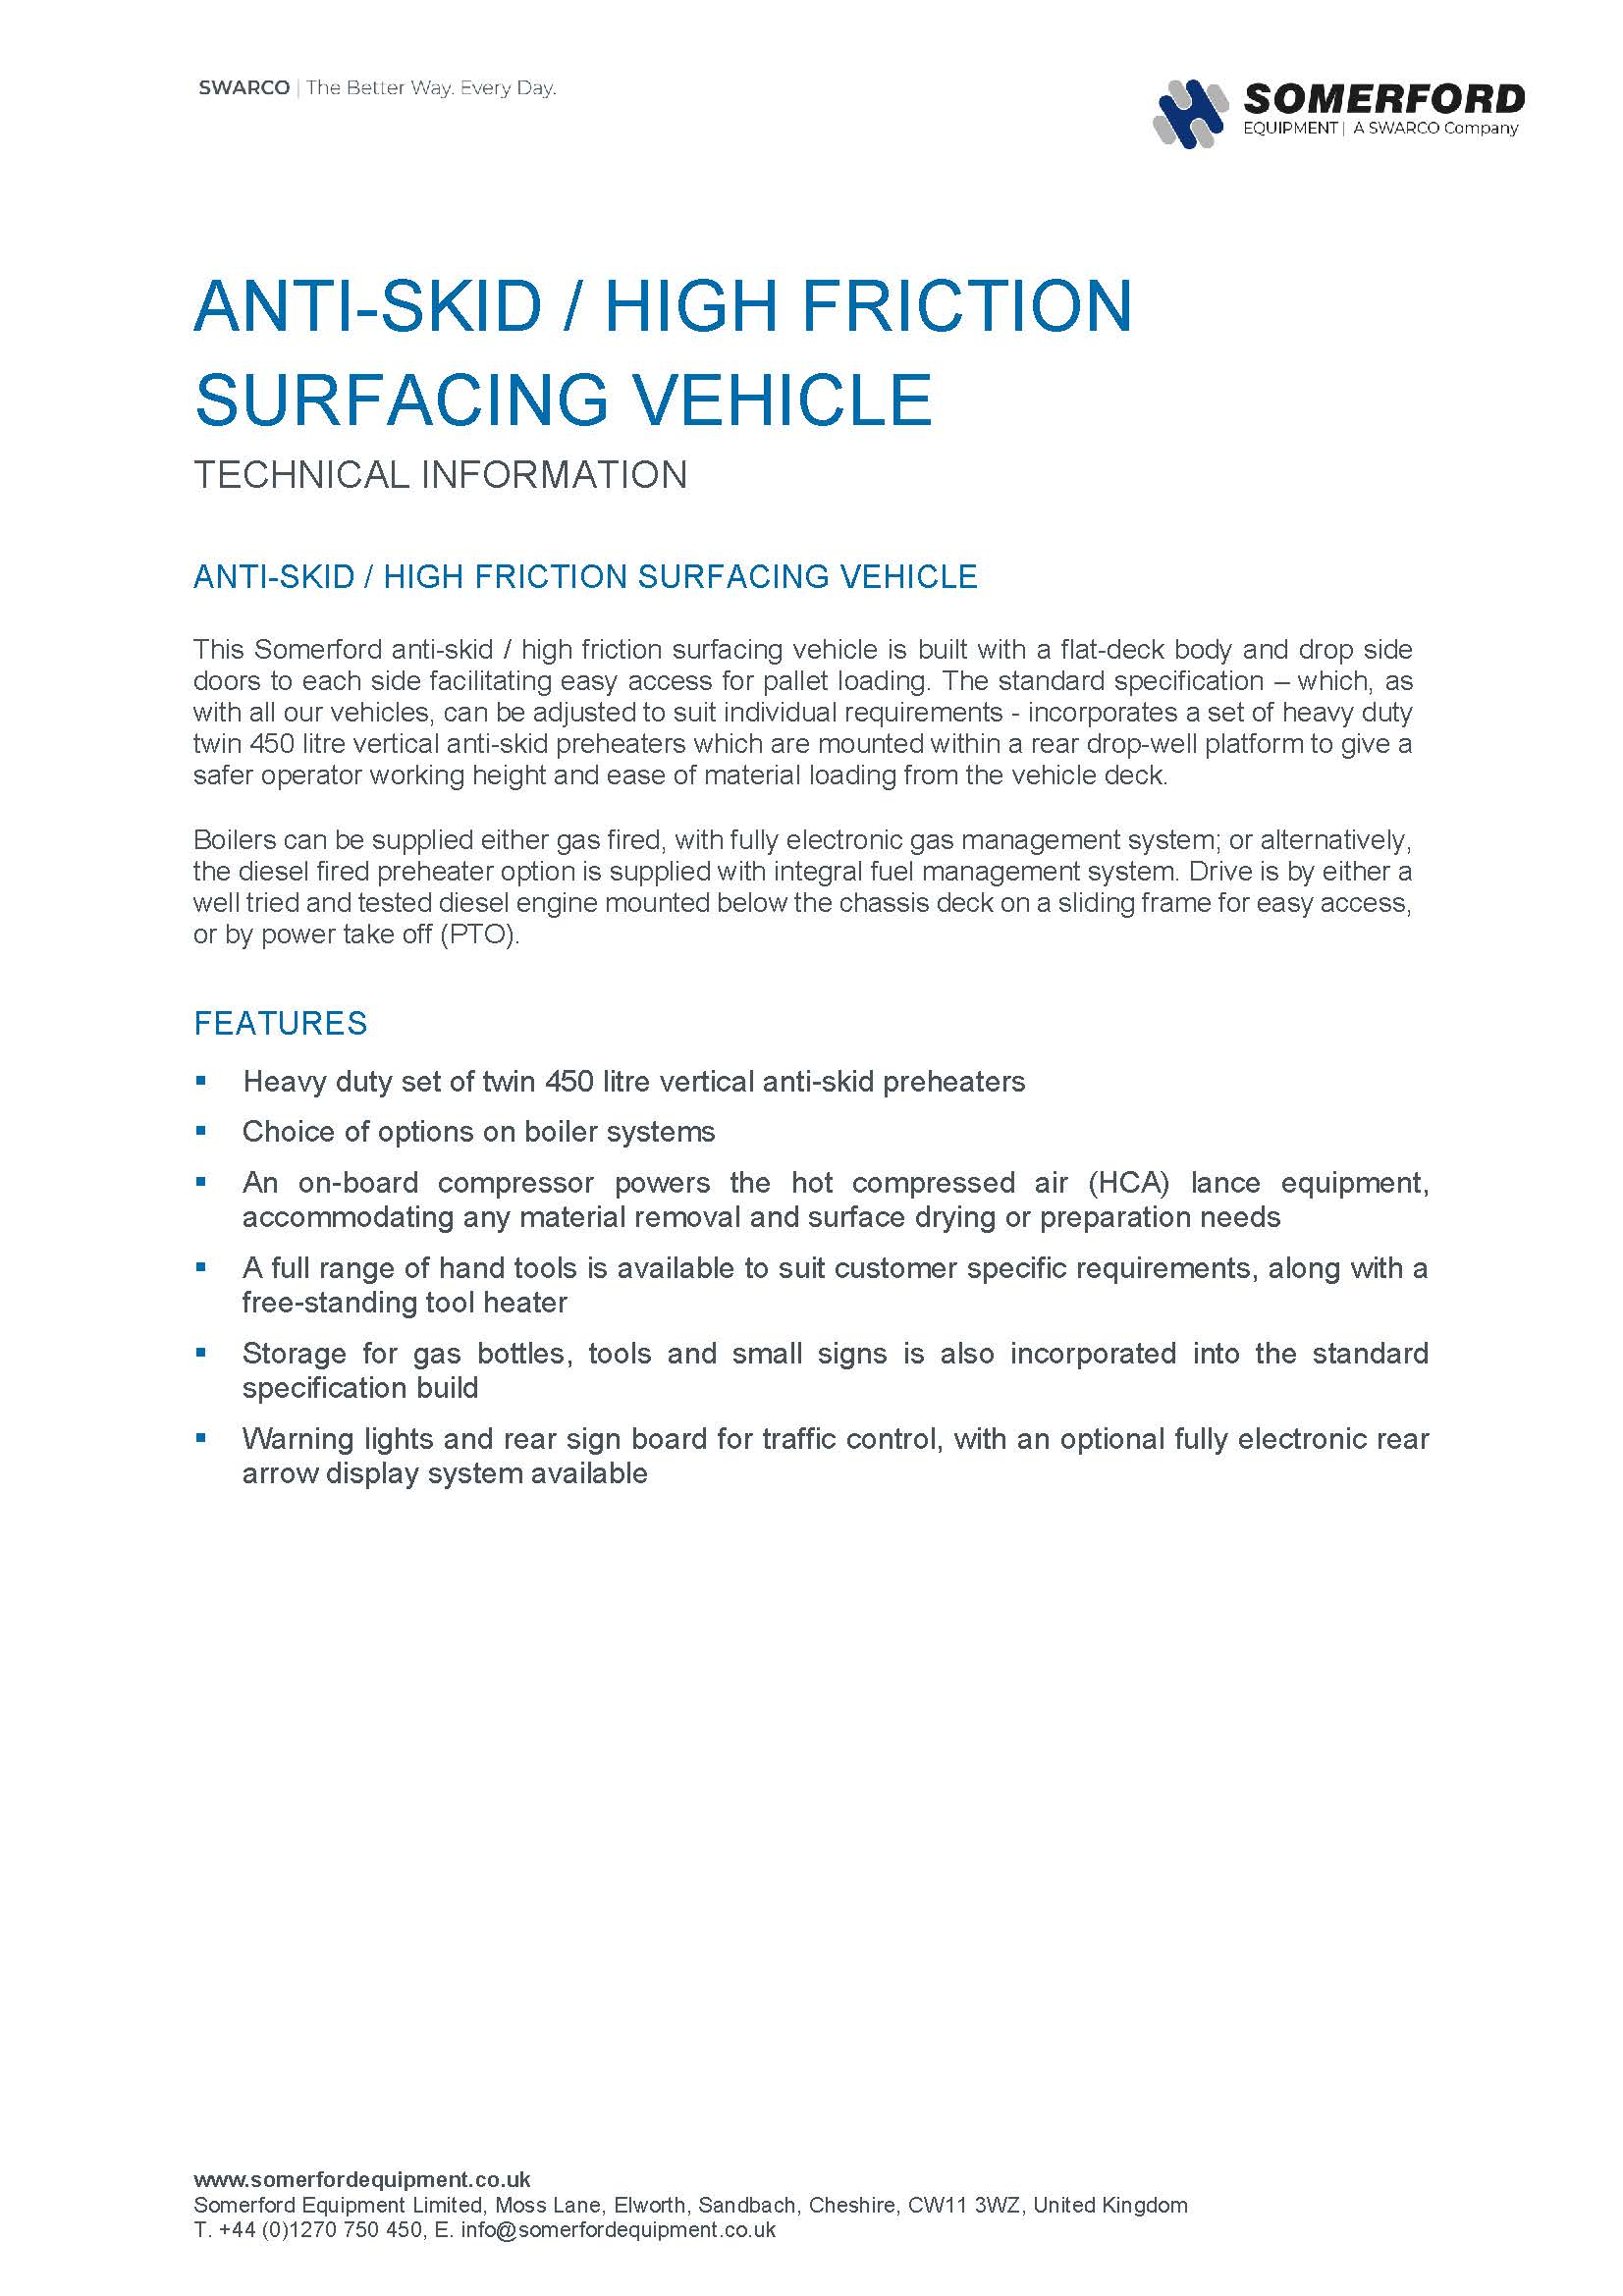 Anti-Skid High Friction Surfacing Vehicle